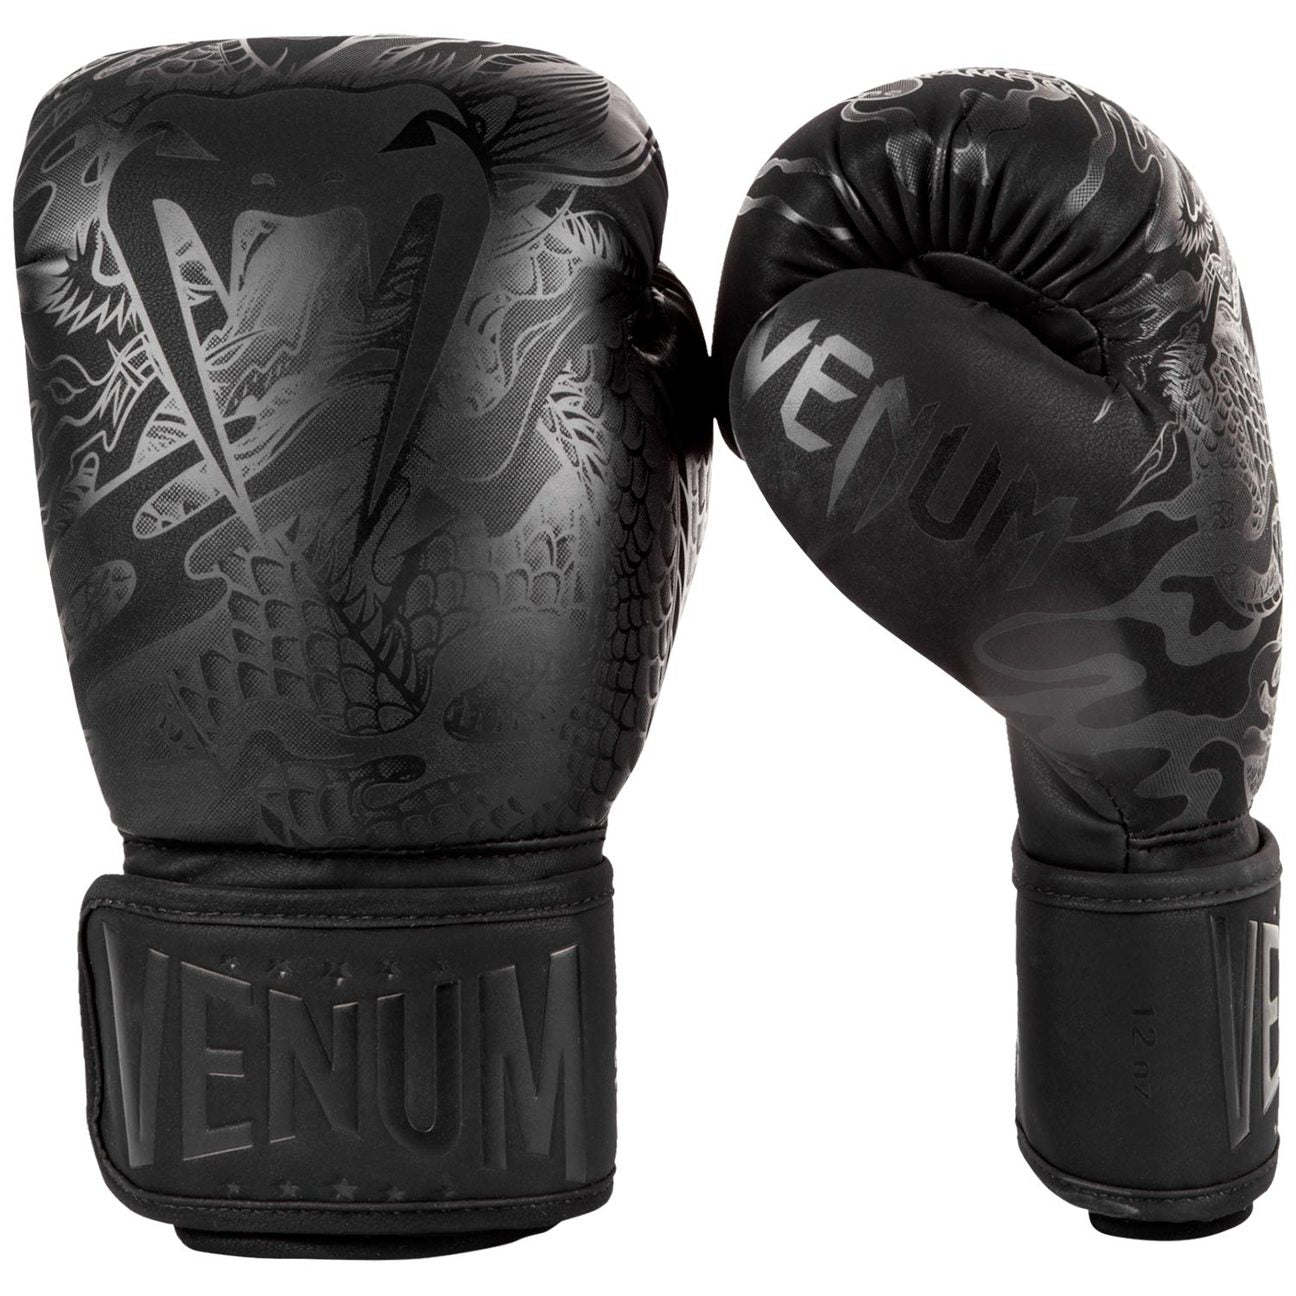 Boxing Gloves - VENUM Flight' - Black